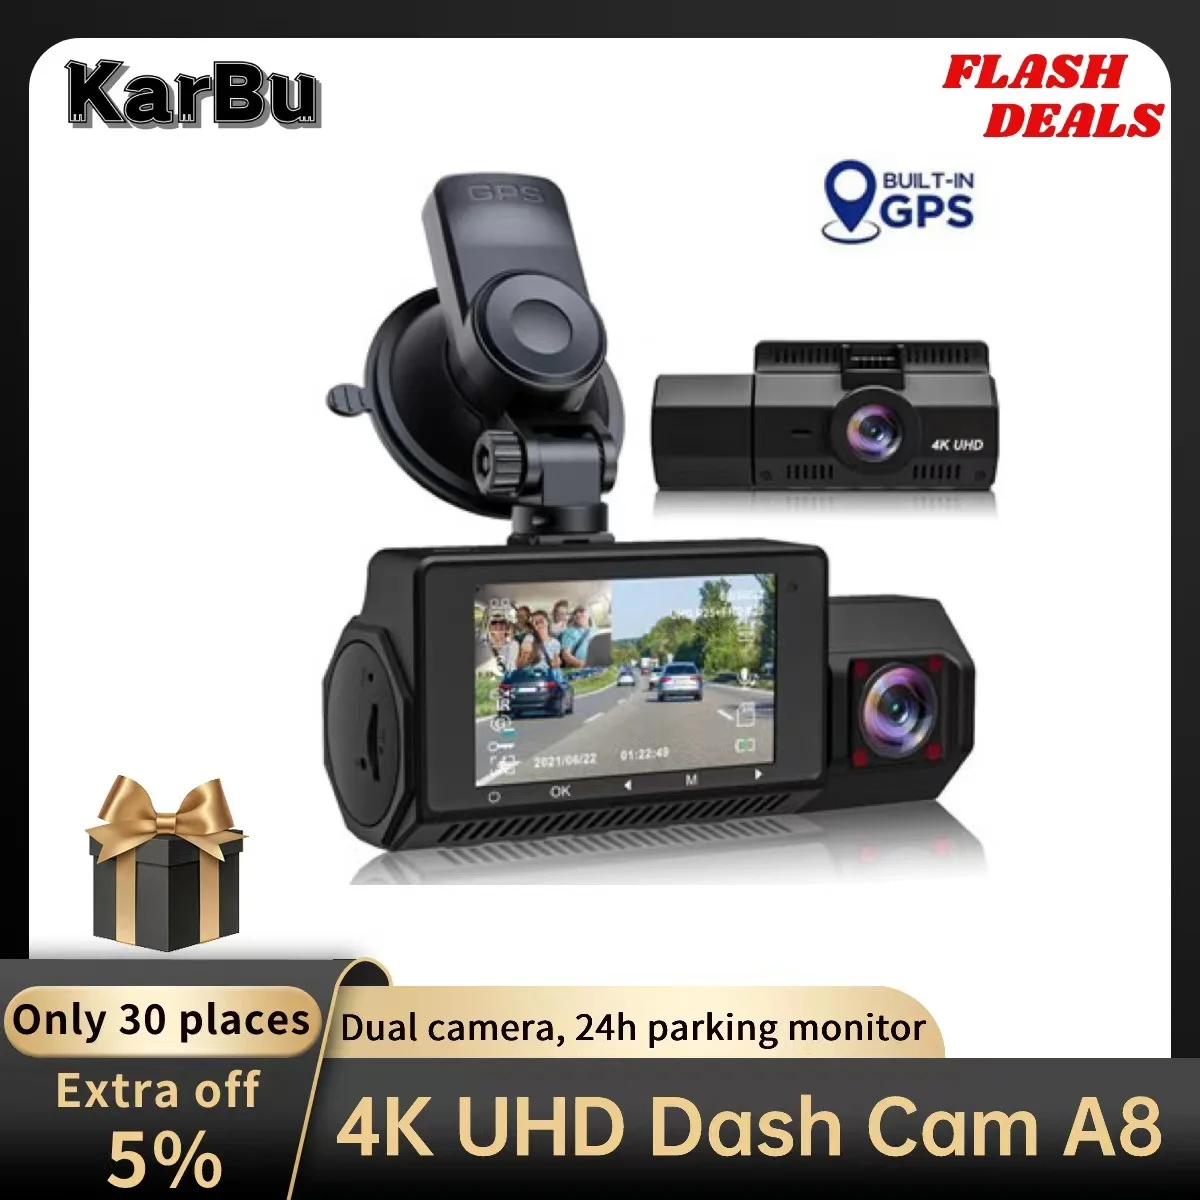 Vantrue N4 Dash Cam 4K Car Video Recorder 3 in 1 Car DVR Dashcam Rear View  Camera with GPS Infrared Night Vision For Truck Tax - AliExpress